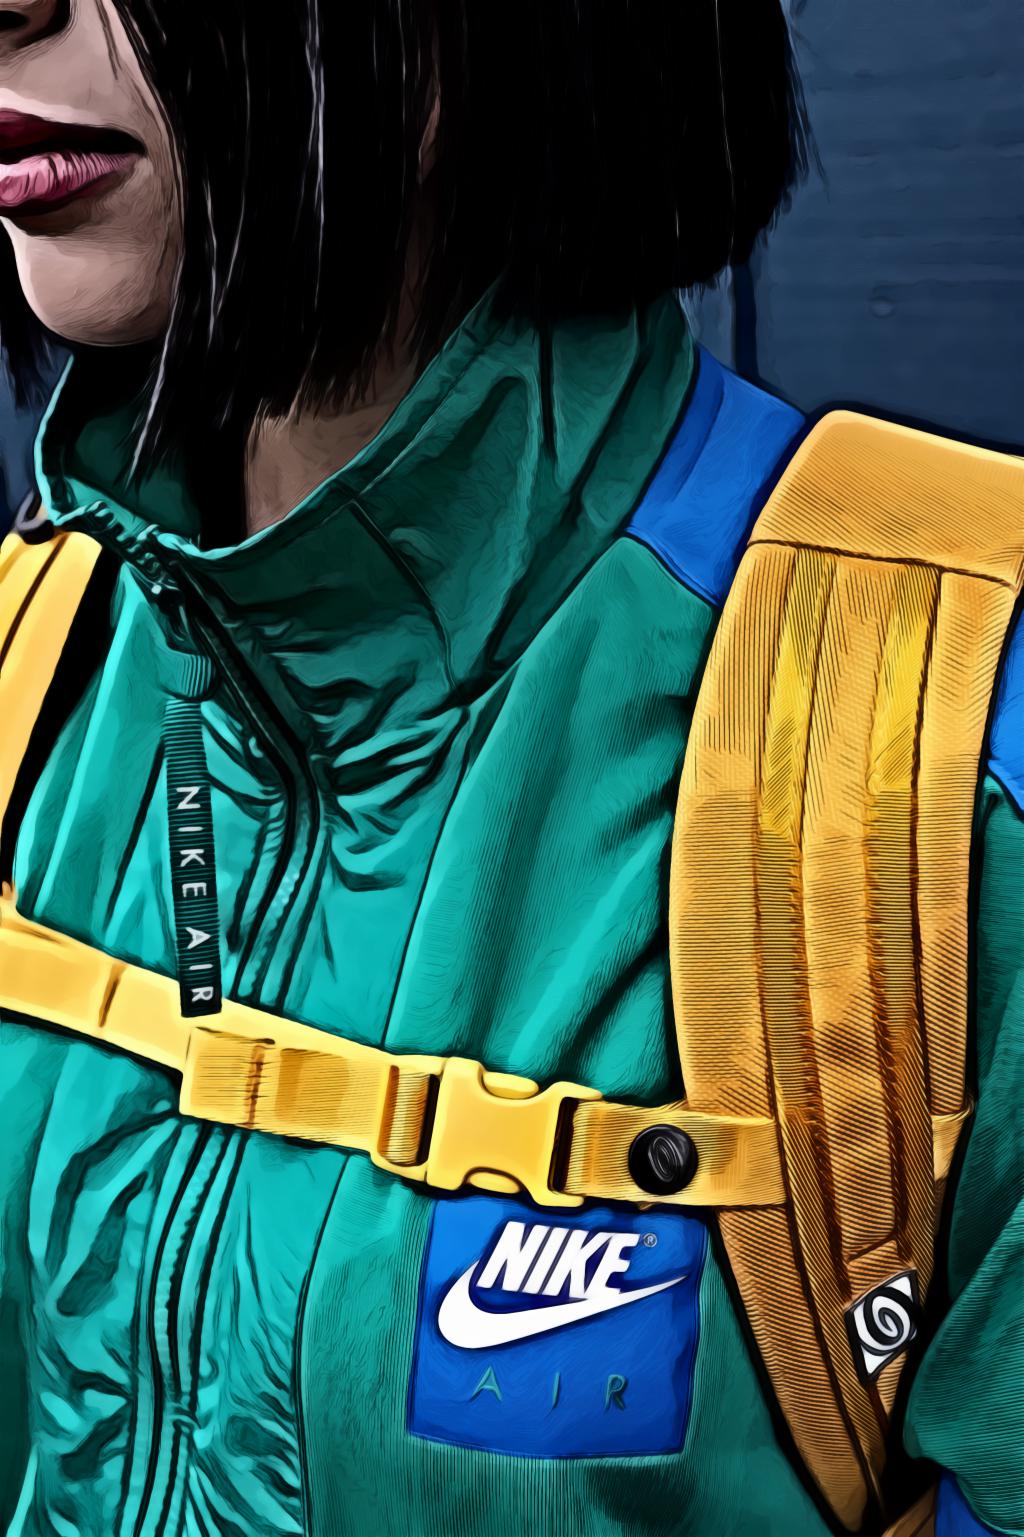 Woman wearing green nike zip top and yellow backpack